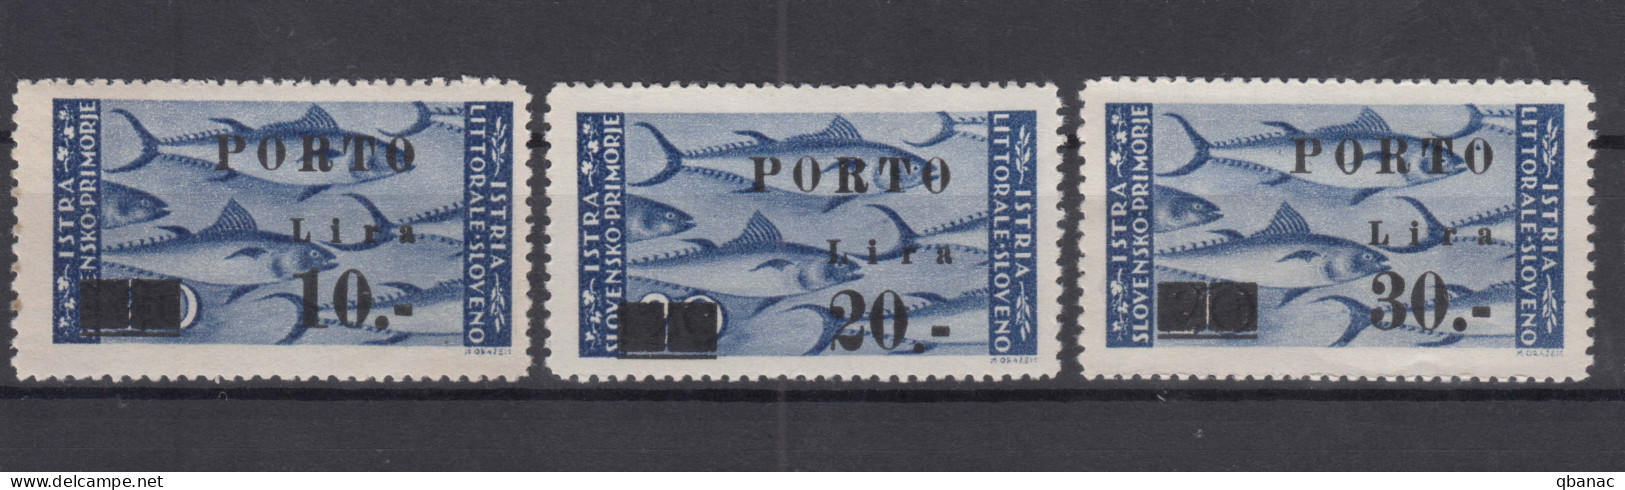 Istria Litorale Yugoslavia Occupation, Porto 1946 Sassone#17-19 Overprint II, Mint Never Hinged - Occup. Iugoslava: Istria